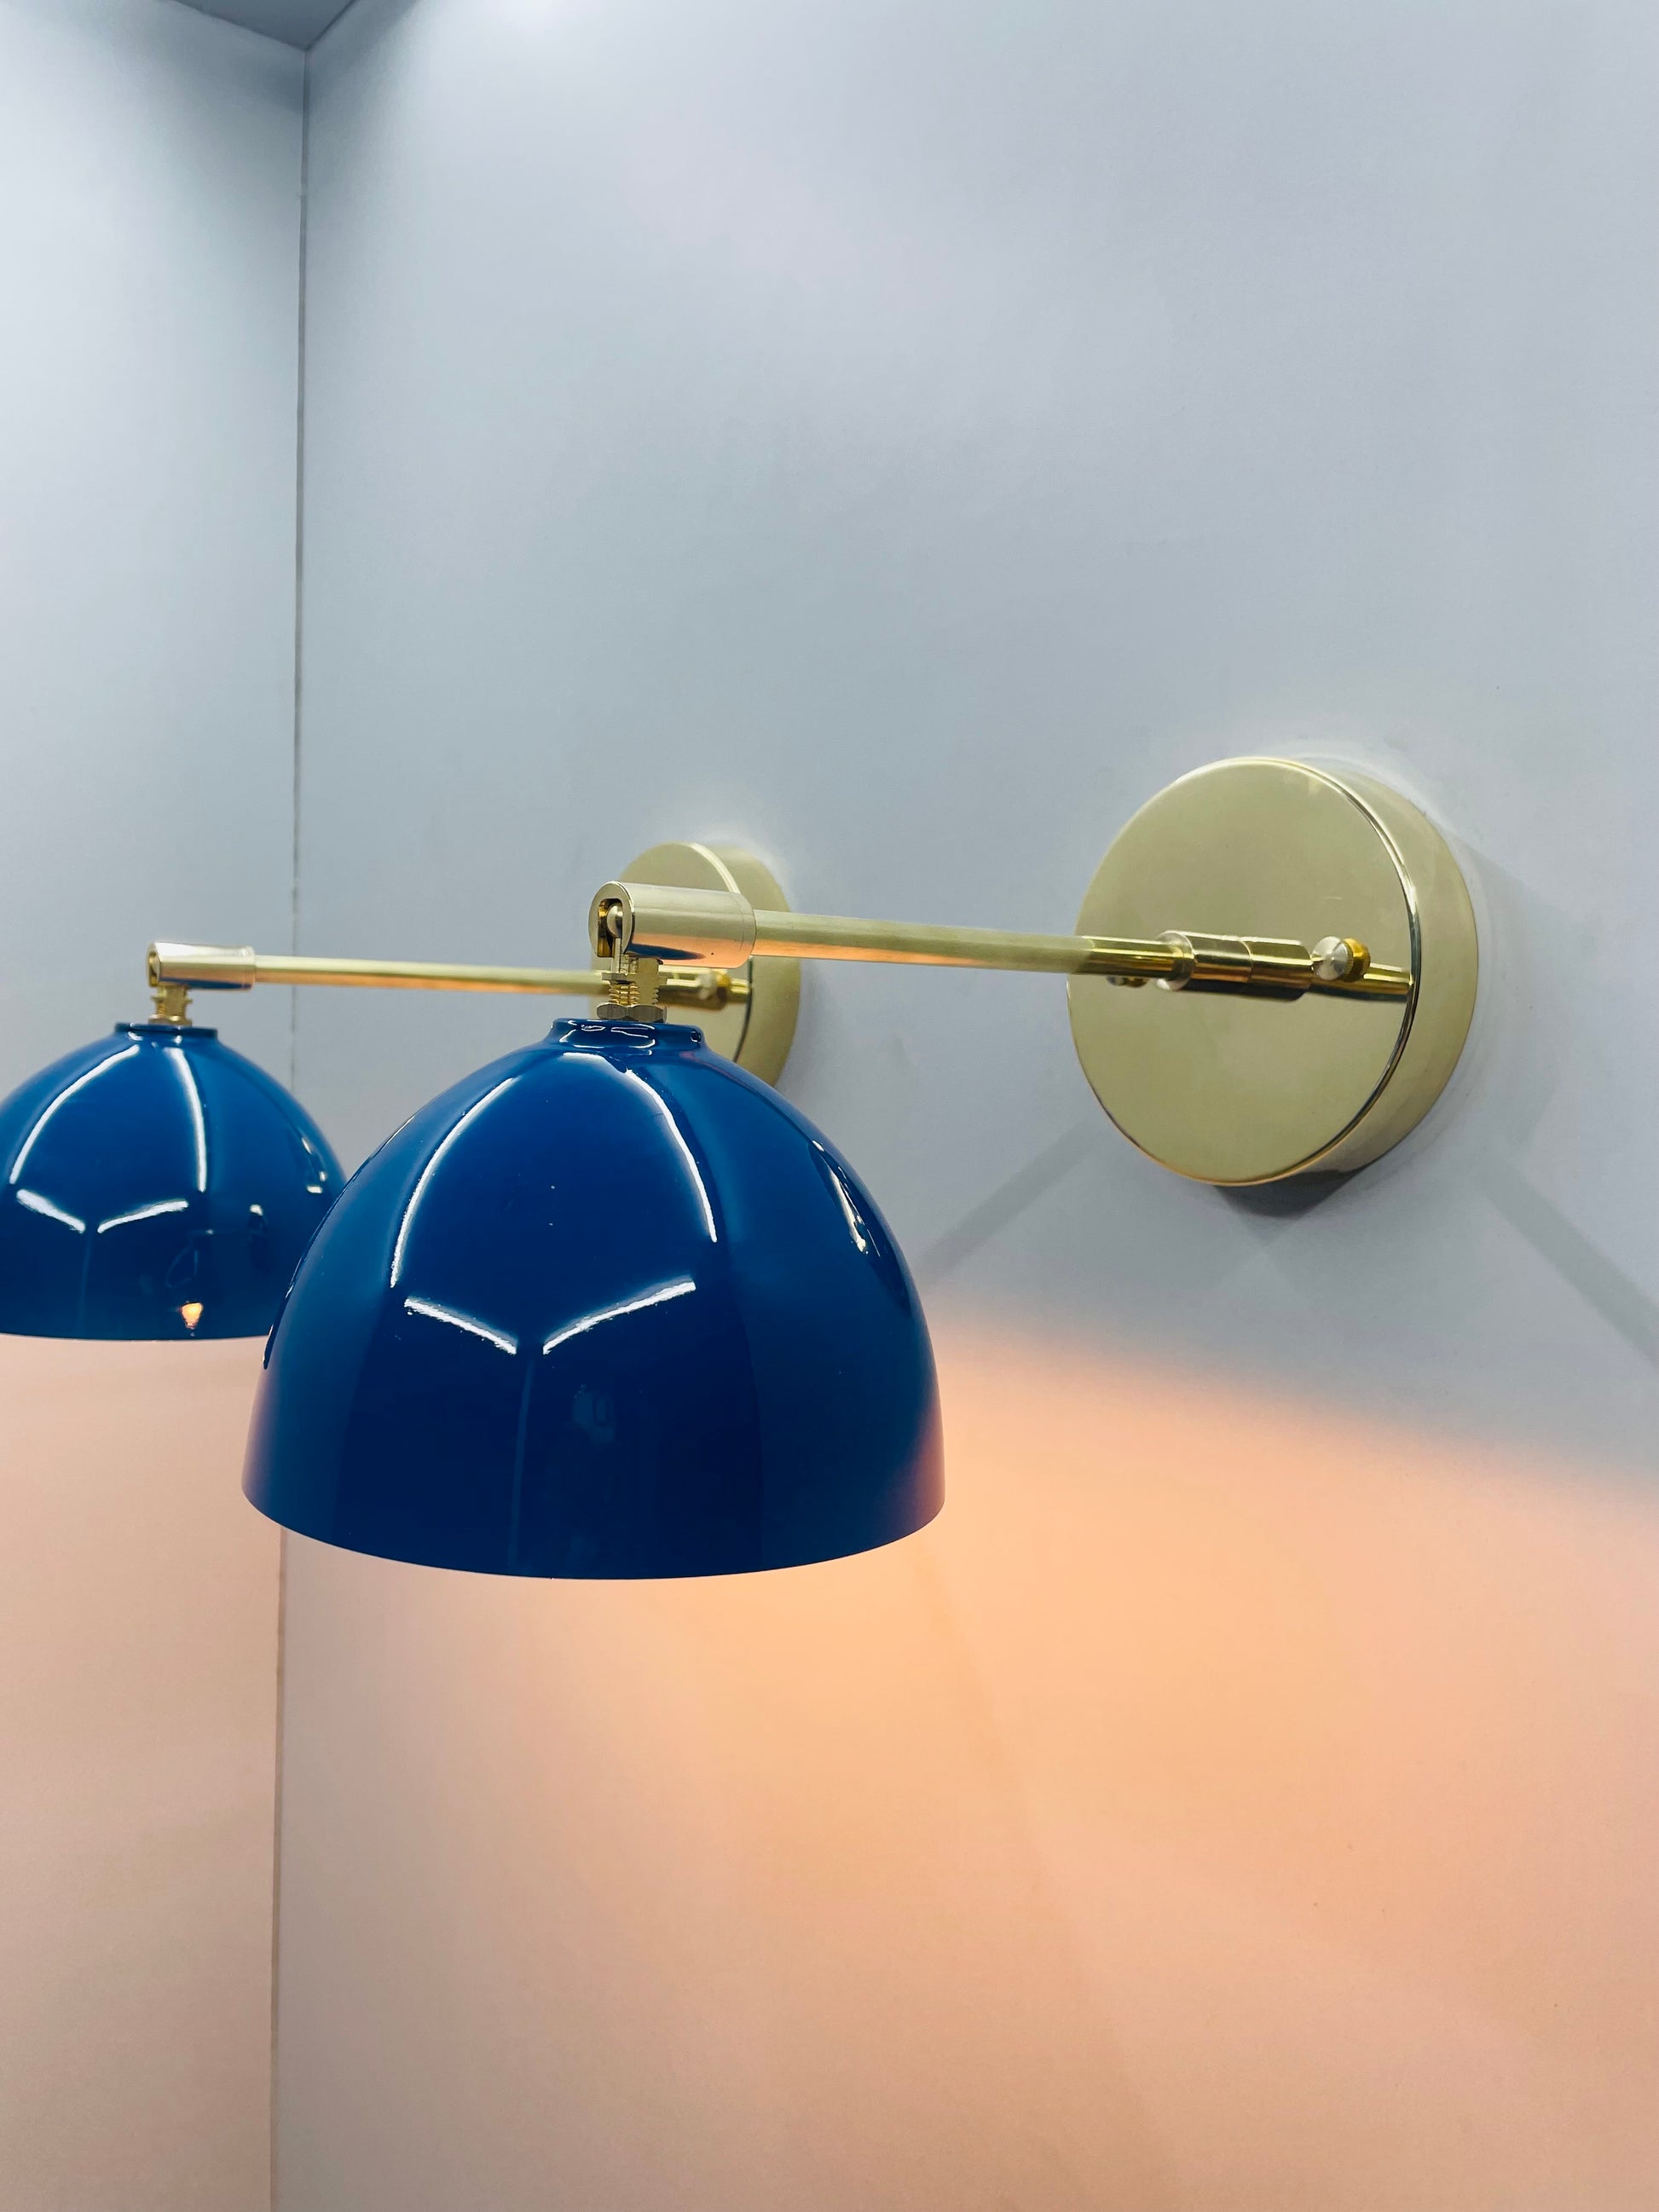 Vintage-Inspired Bedside Wall Sconce Lamps - Modern and Minimal Design